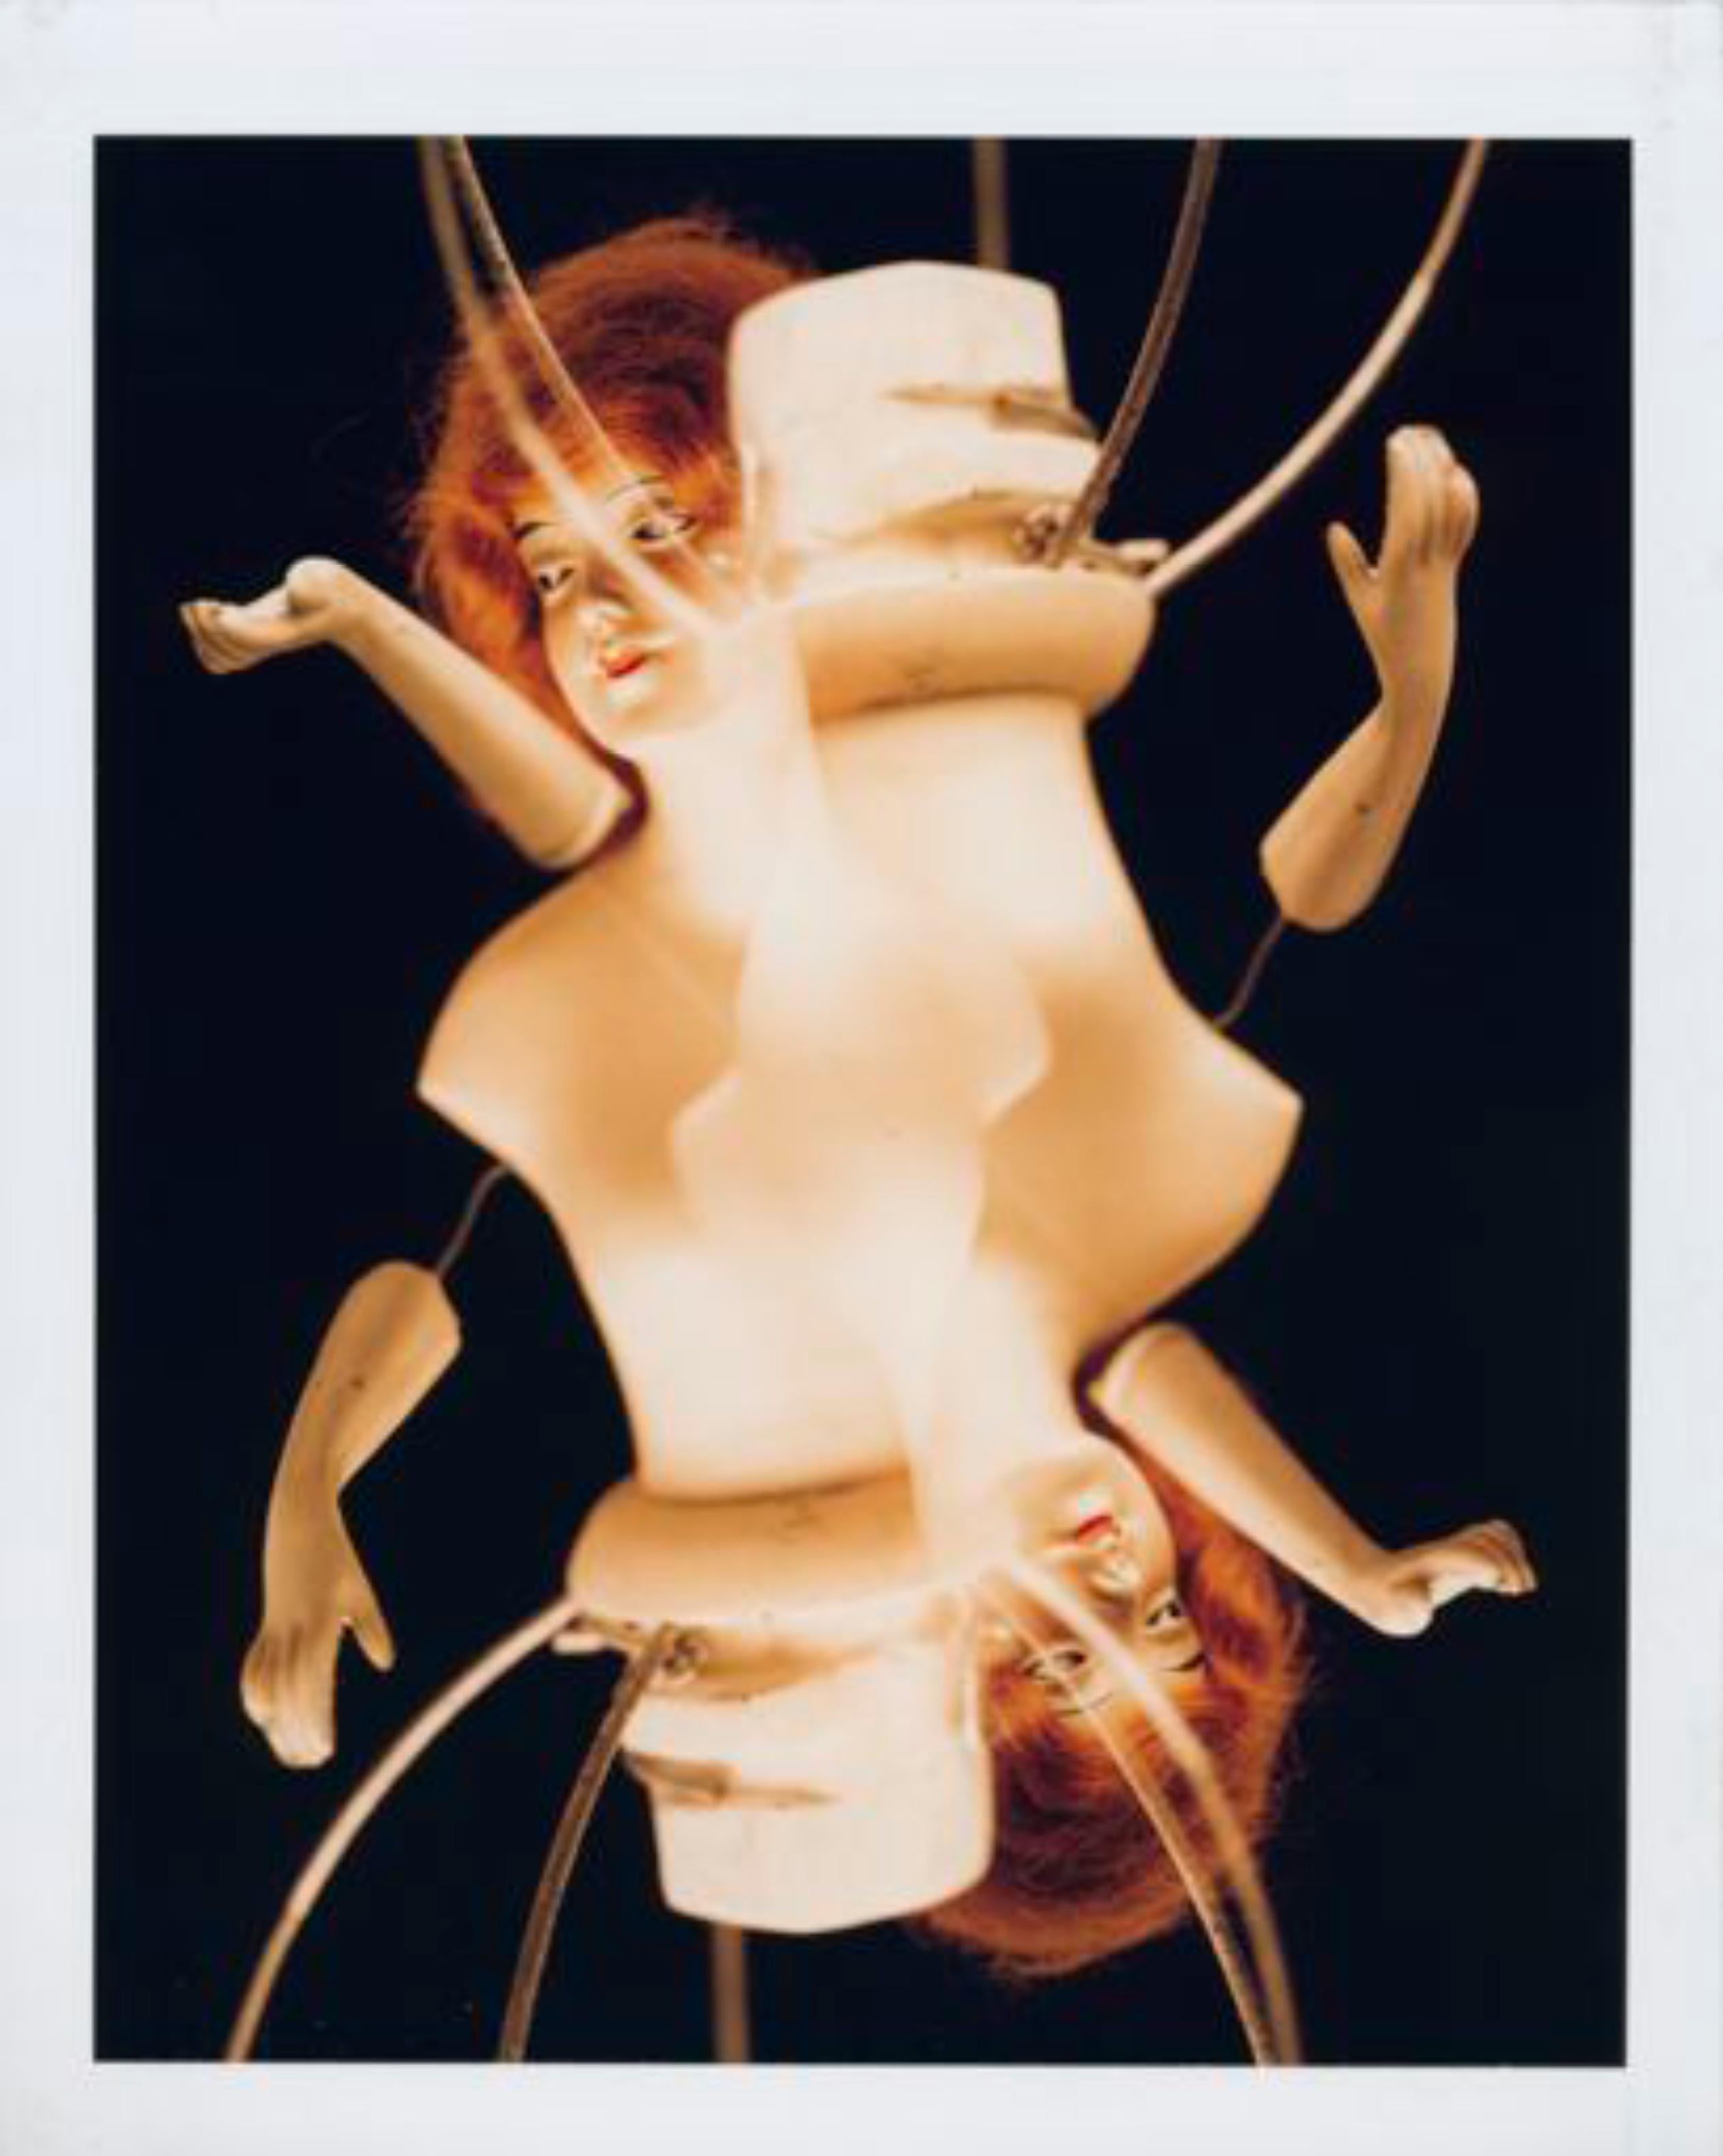 Jose Picayo Abstract Photograph - "Doll", New York, NY, 1996